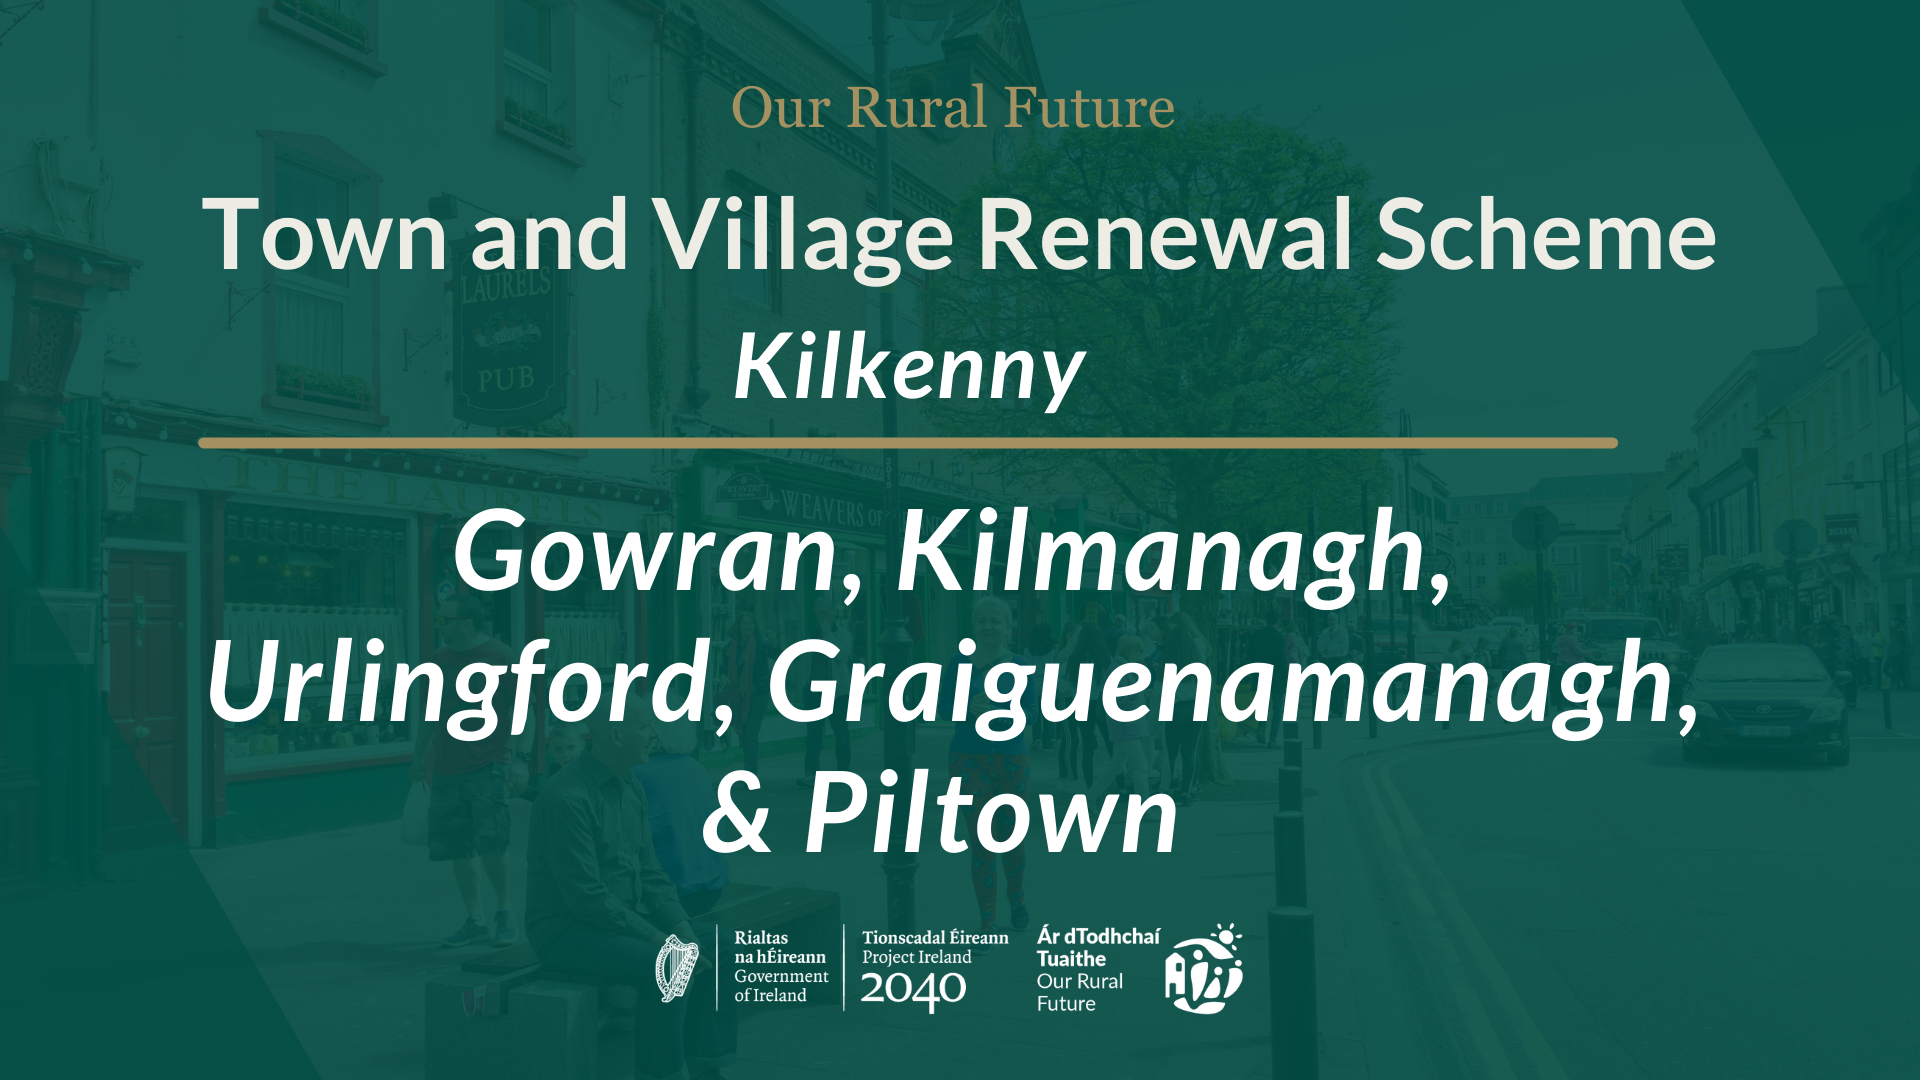 Kilkenny---Town-and-Village-Renewal-Scheme---Image-Copy